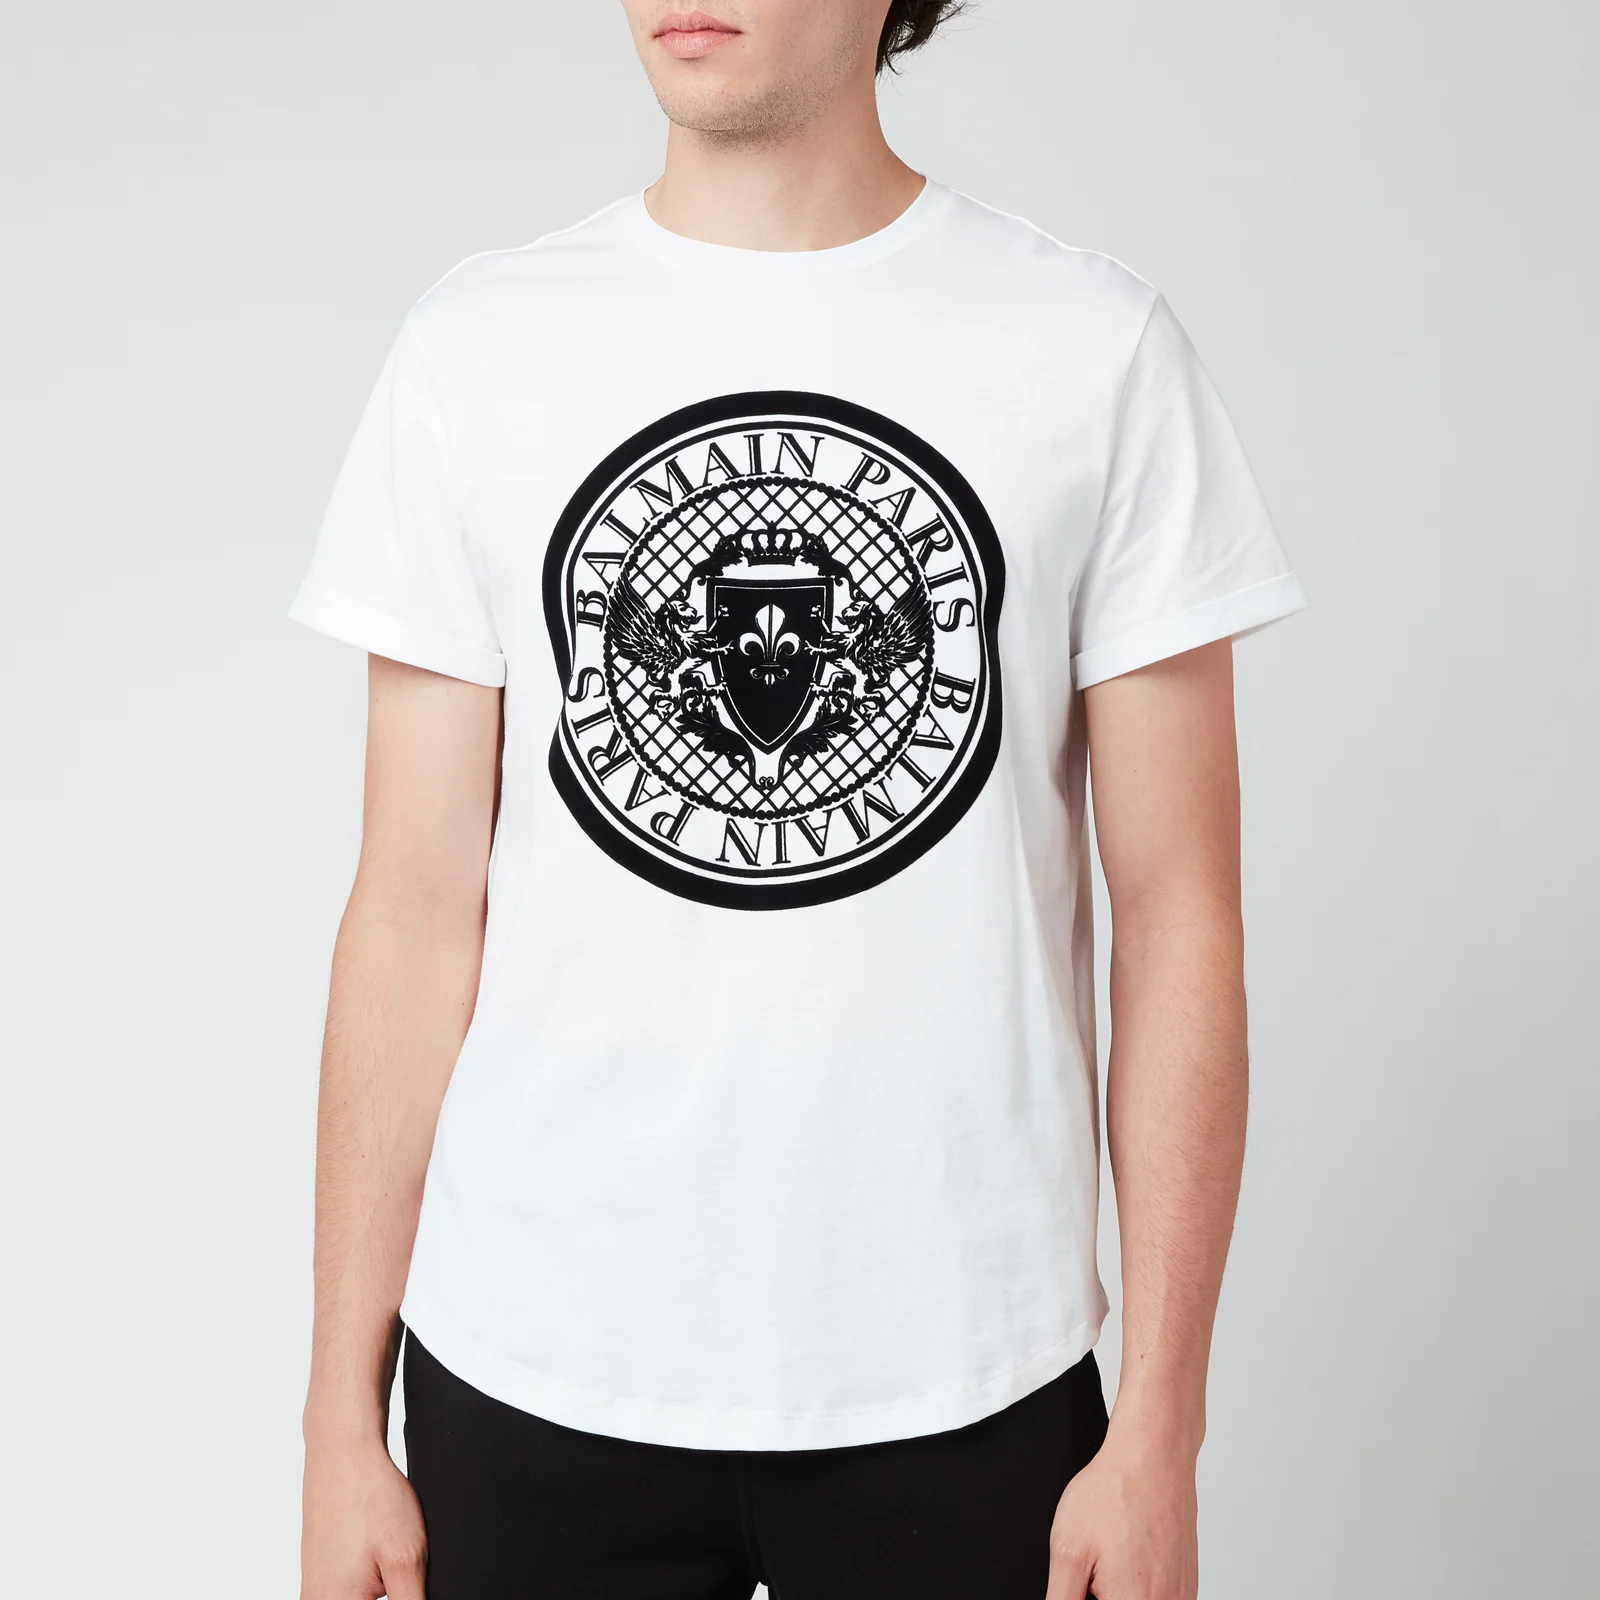 Balmain Men's Coin Flock T-Shirt - White/Black Image 1